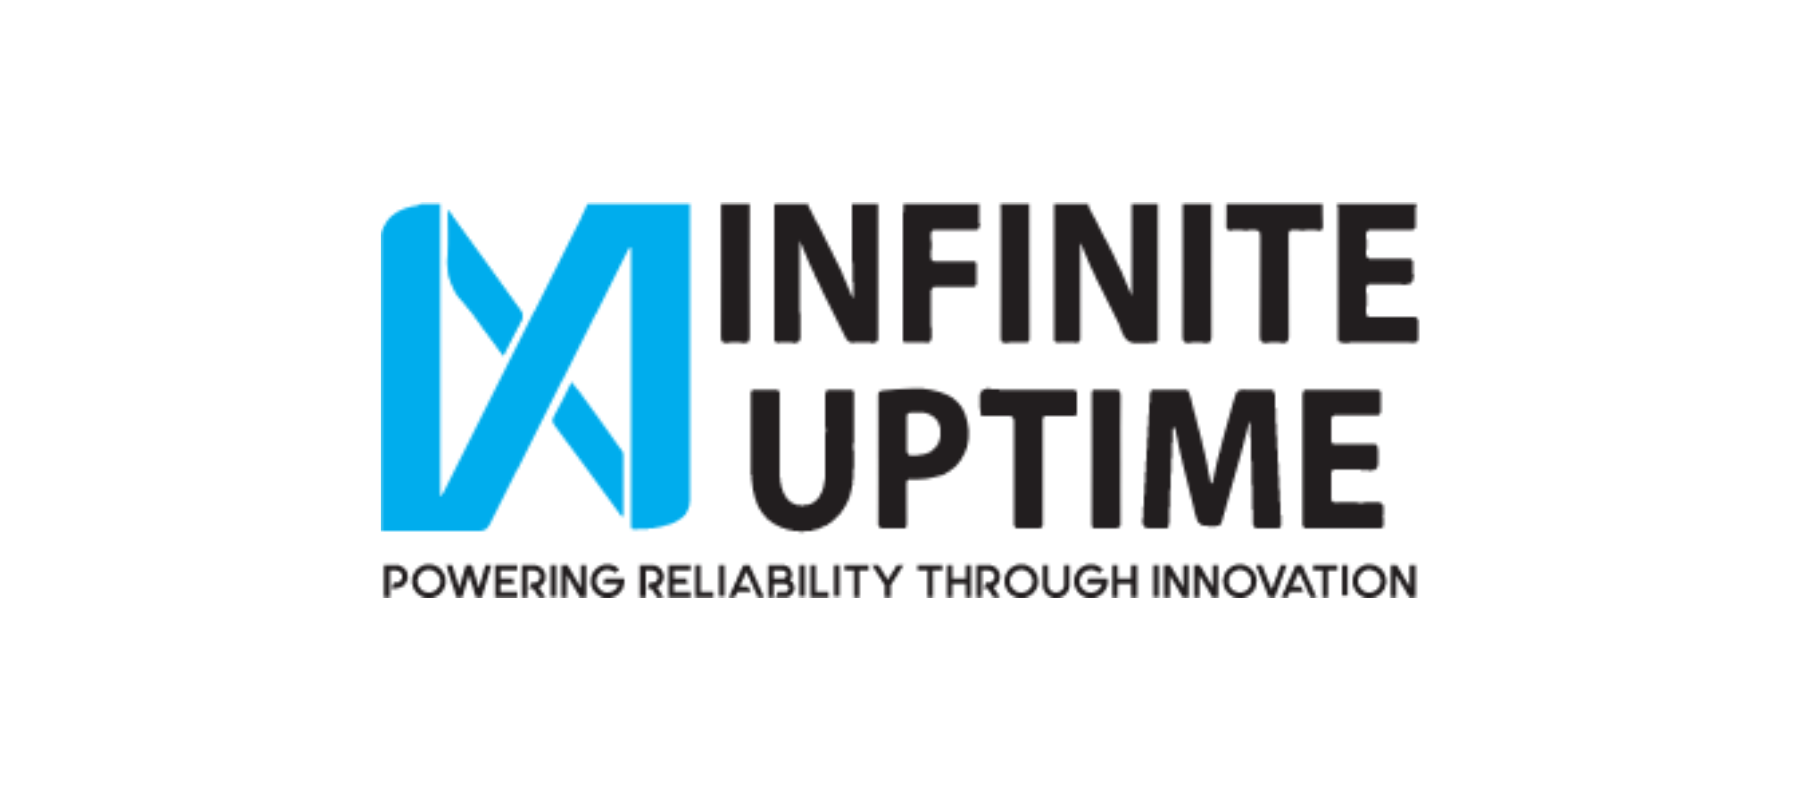 TDK Ventures invests in Infinite Uptime's Industry 5.0 digital intelligence platform